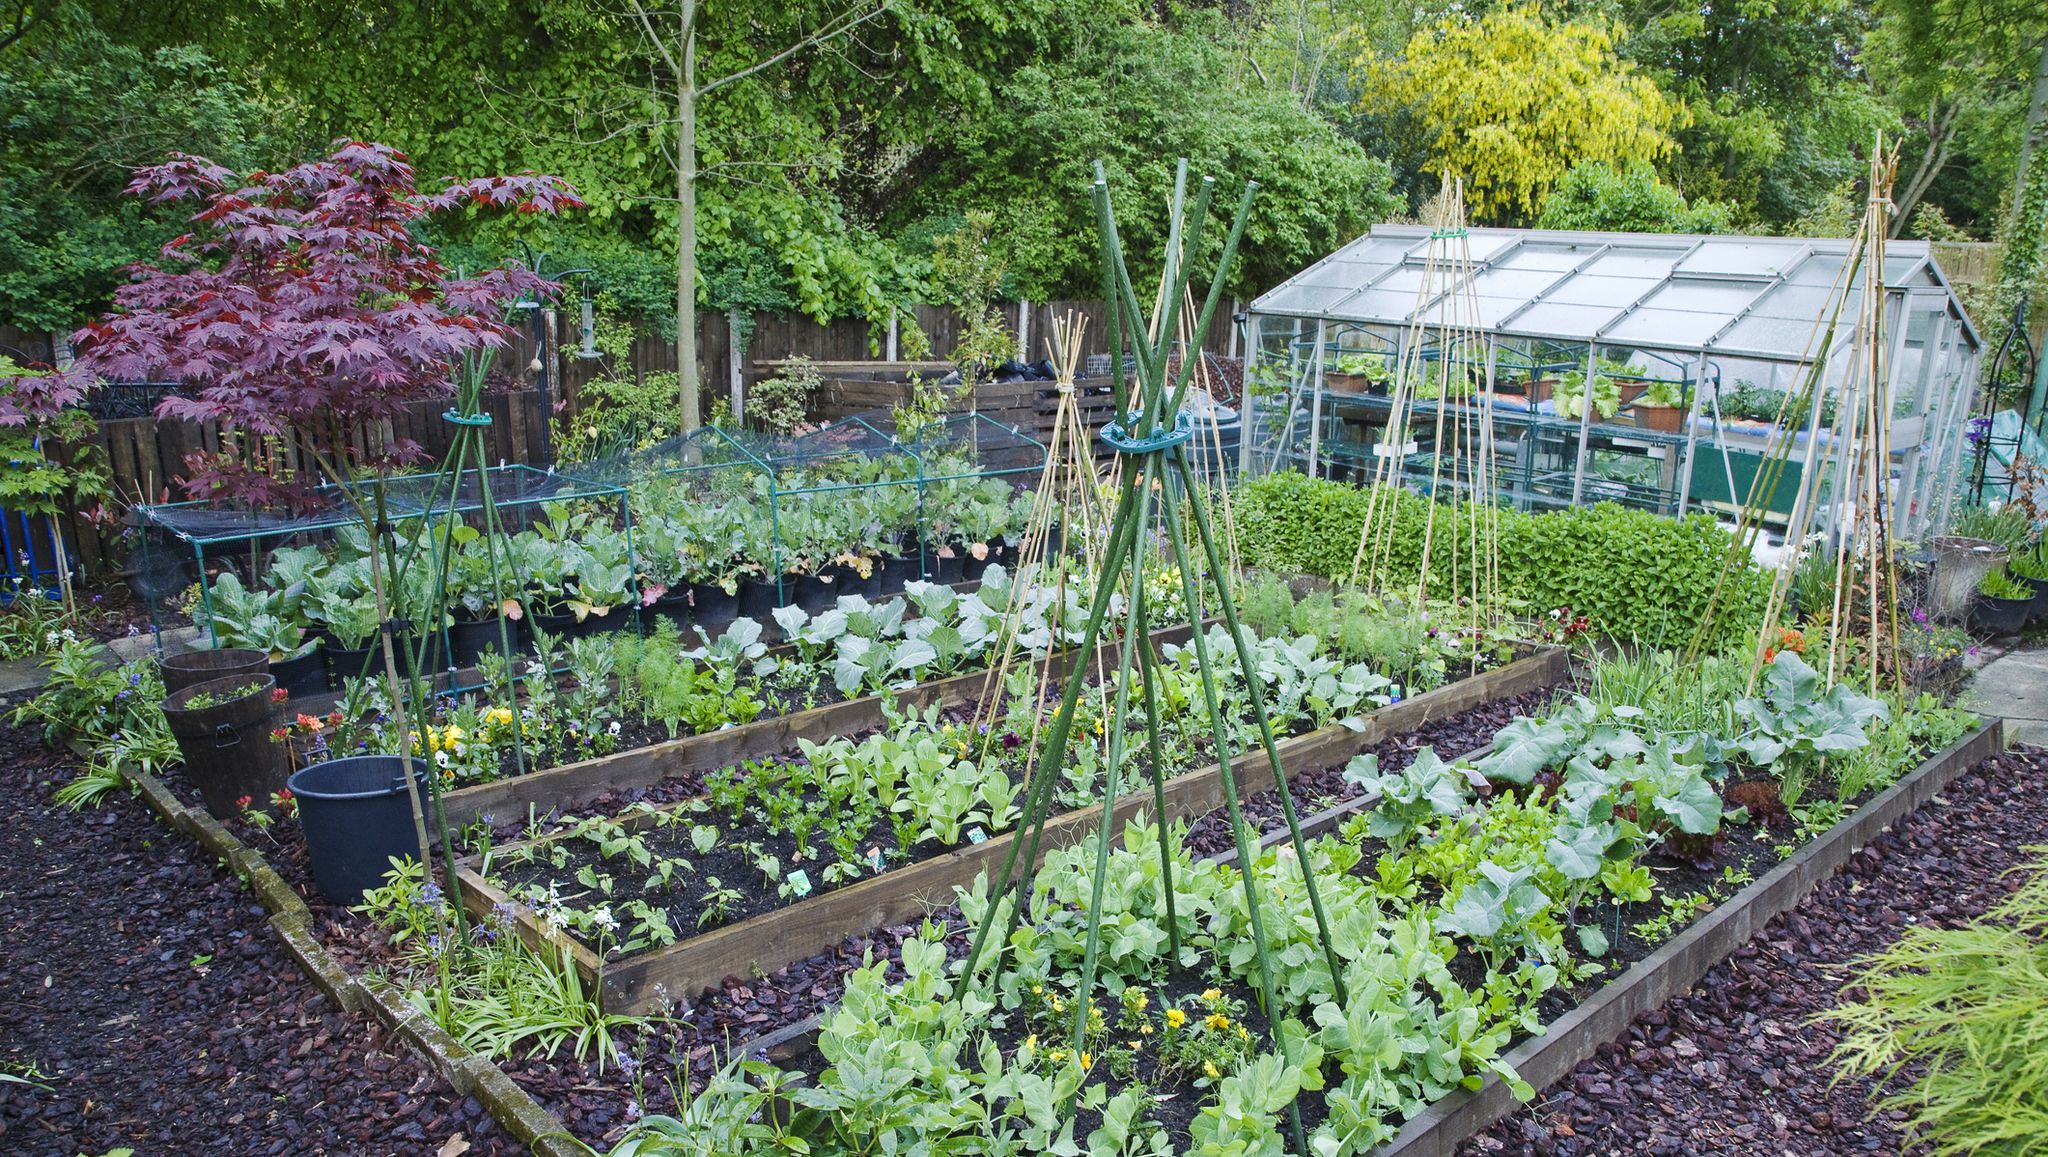 Botanica brings organic, edible gardens home